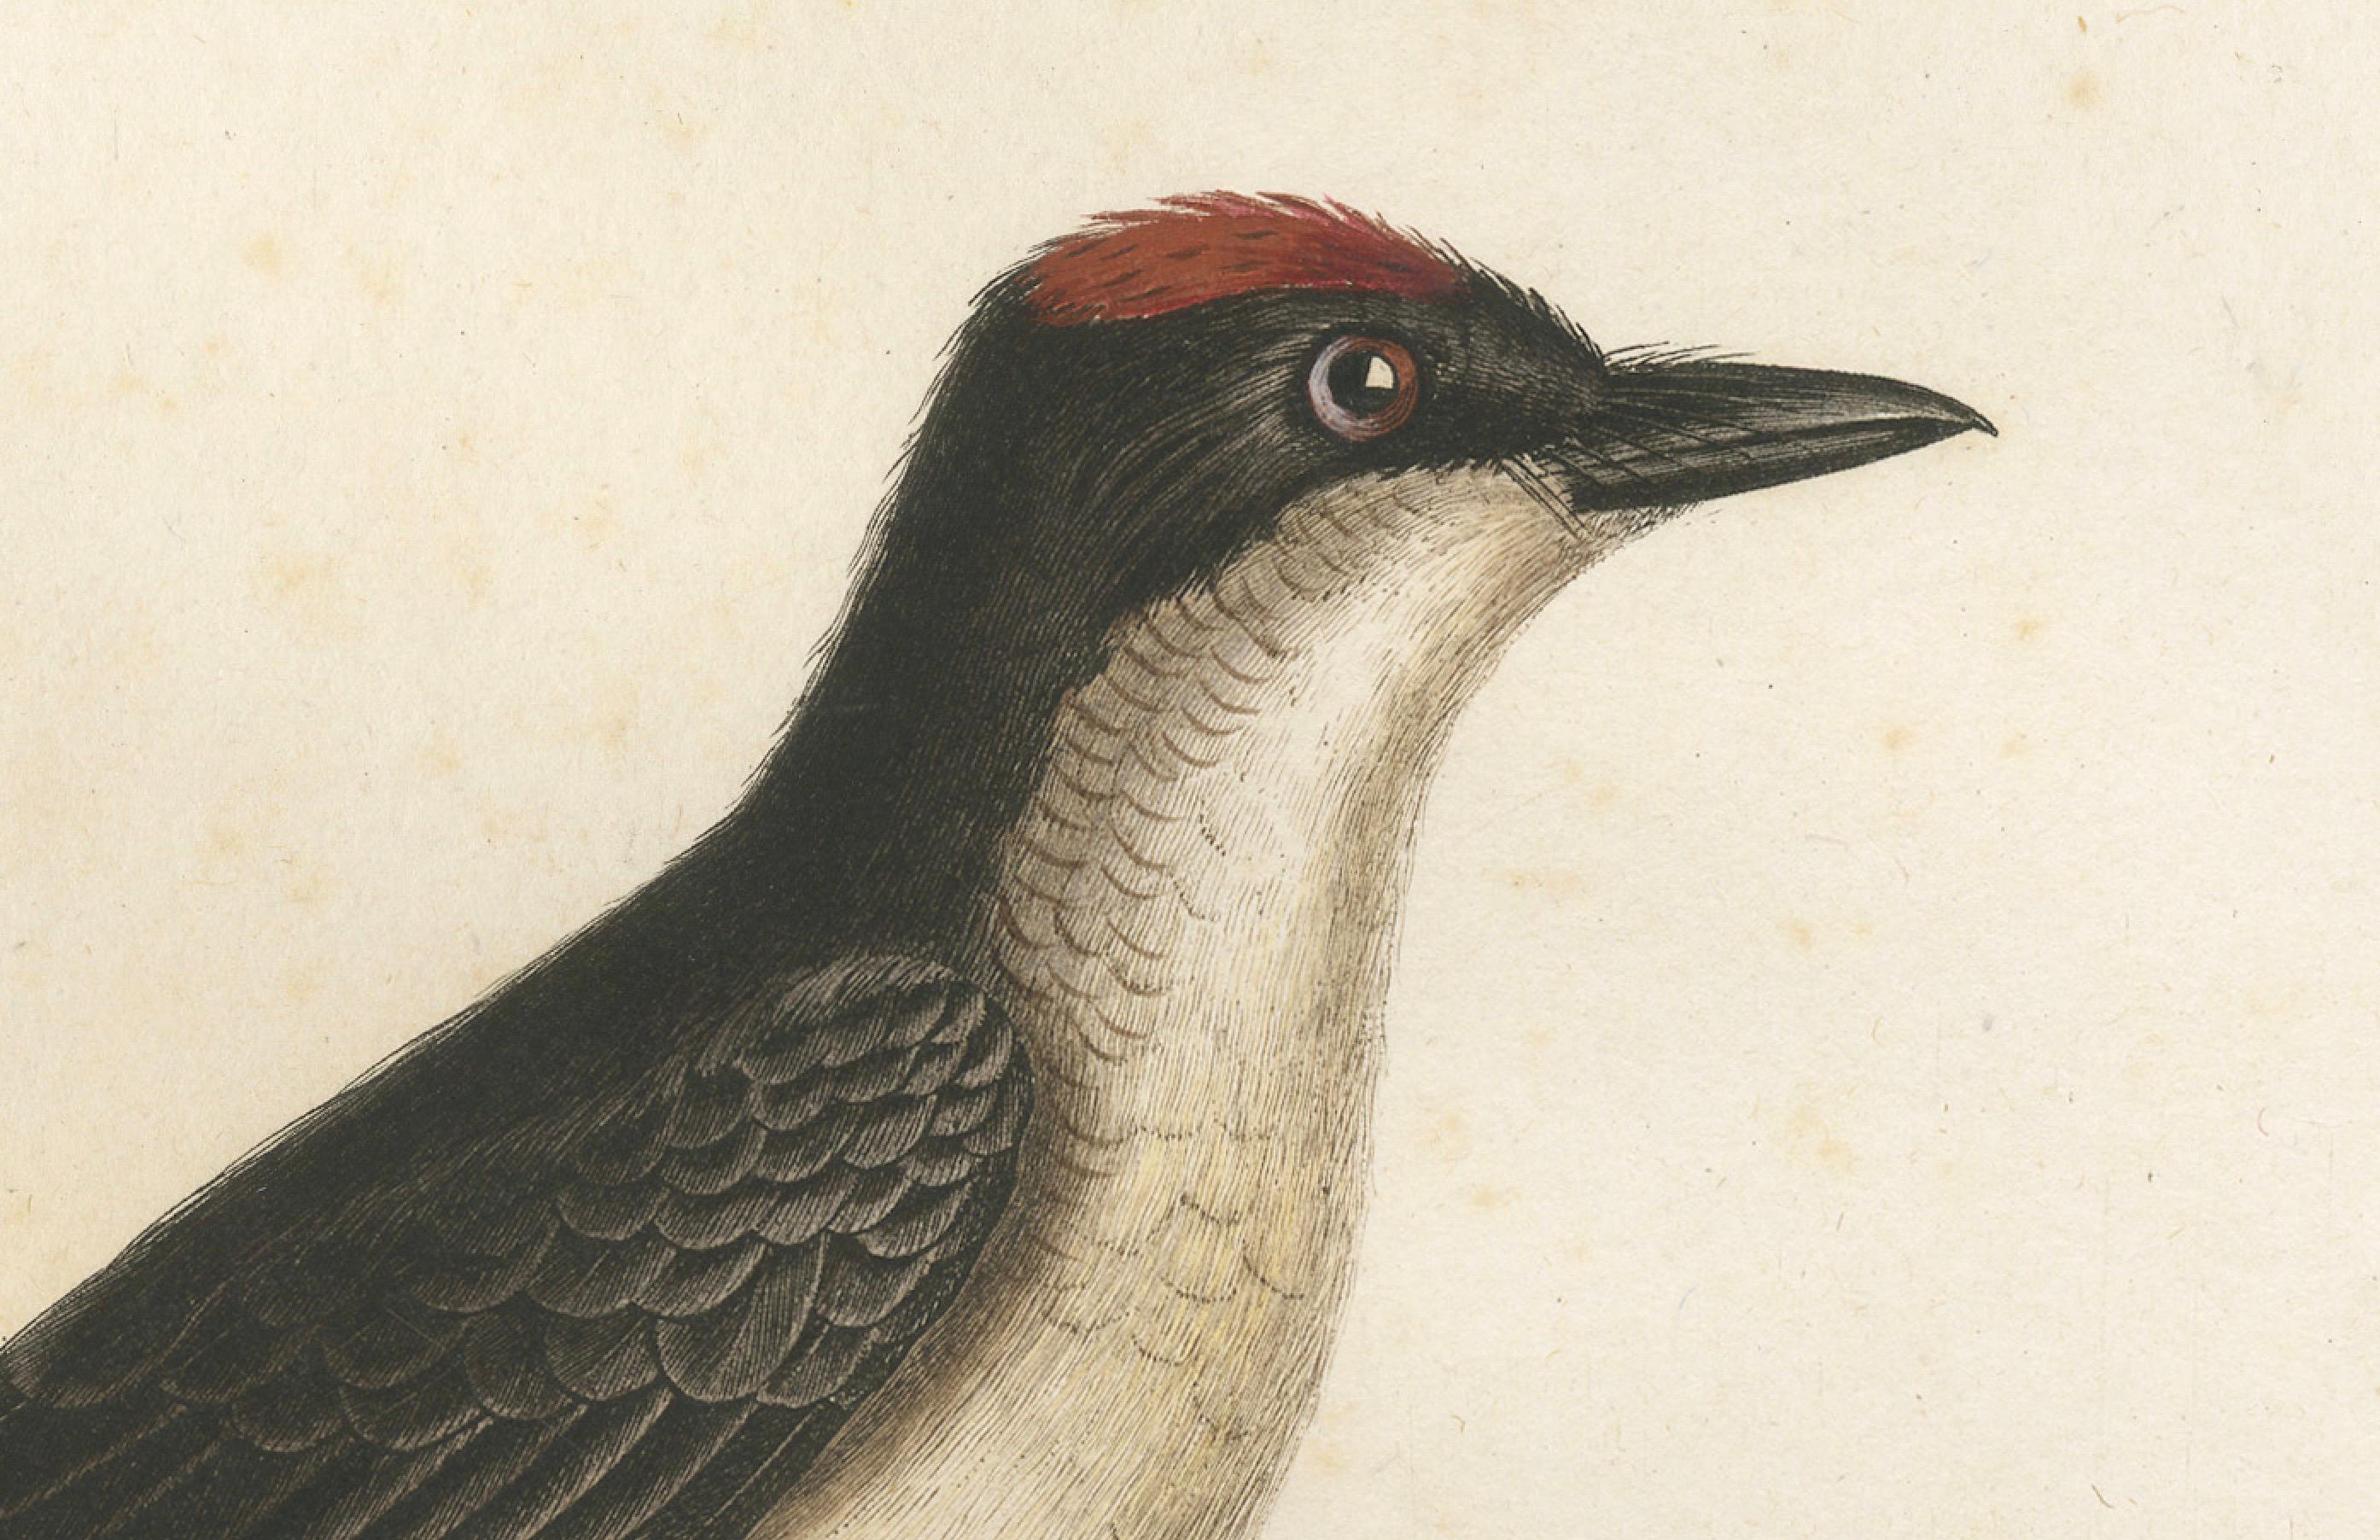 19th Century 1807 Vermilion Flycatcher Handcolored Print- Antique Ornithological Illustration For Sale